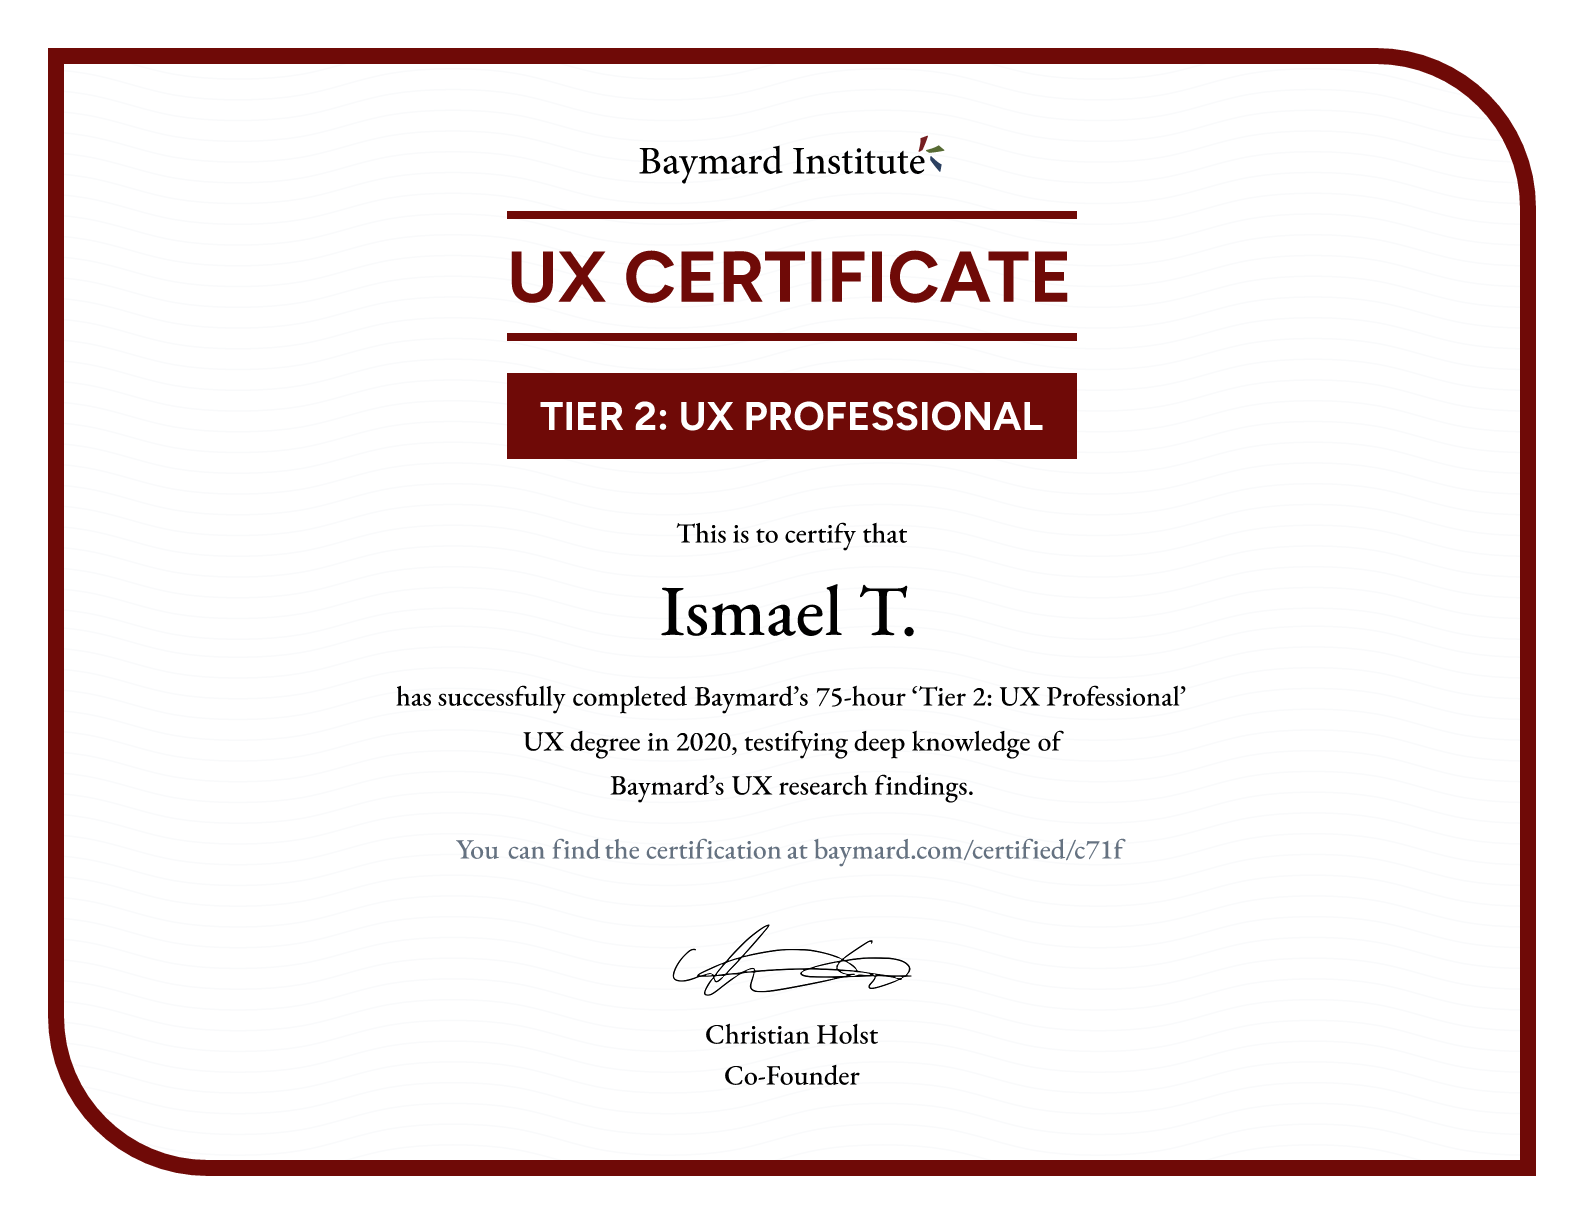 Ismael T.’s certificate